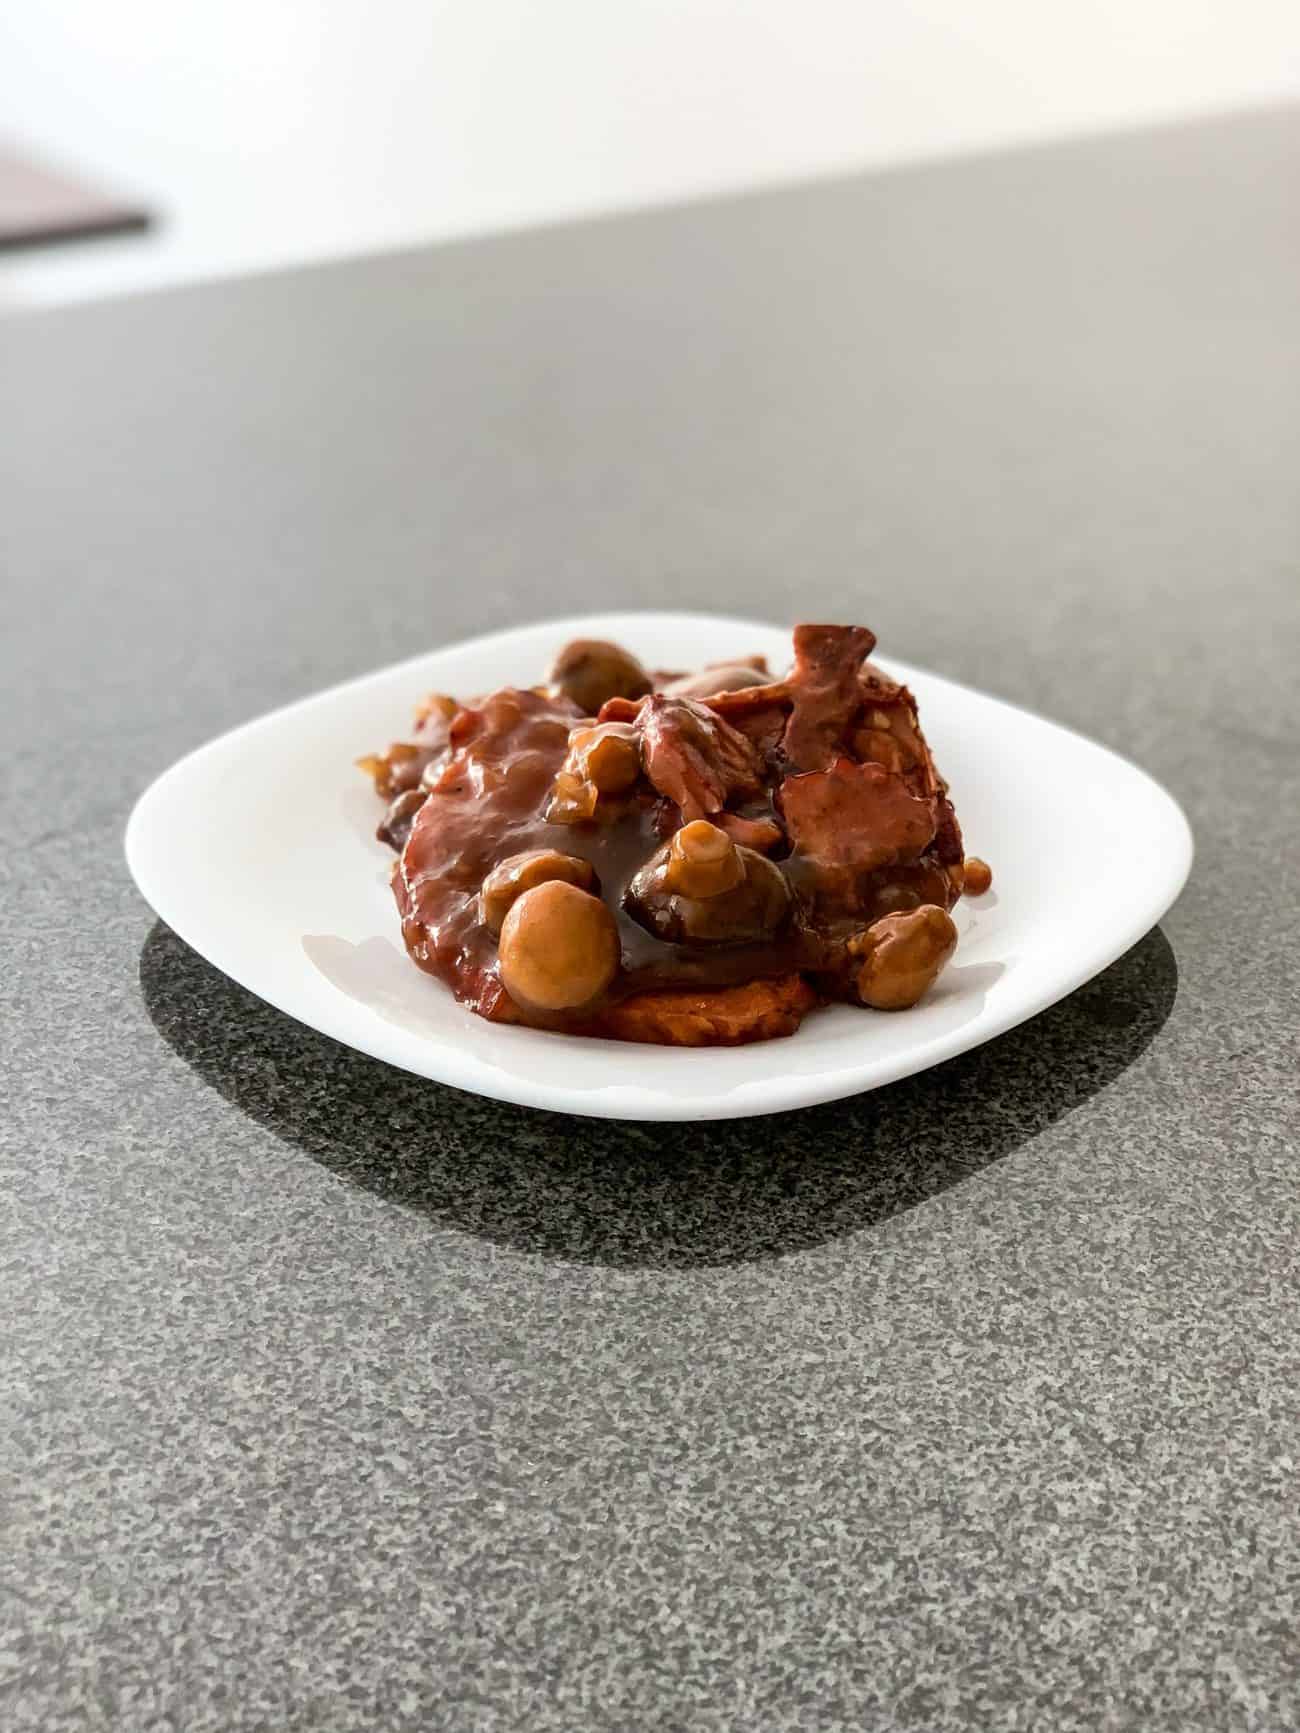 Grandma’s Pork Chops in Mushroom Gravy